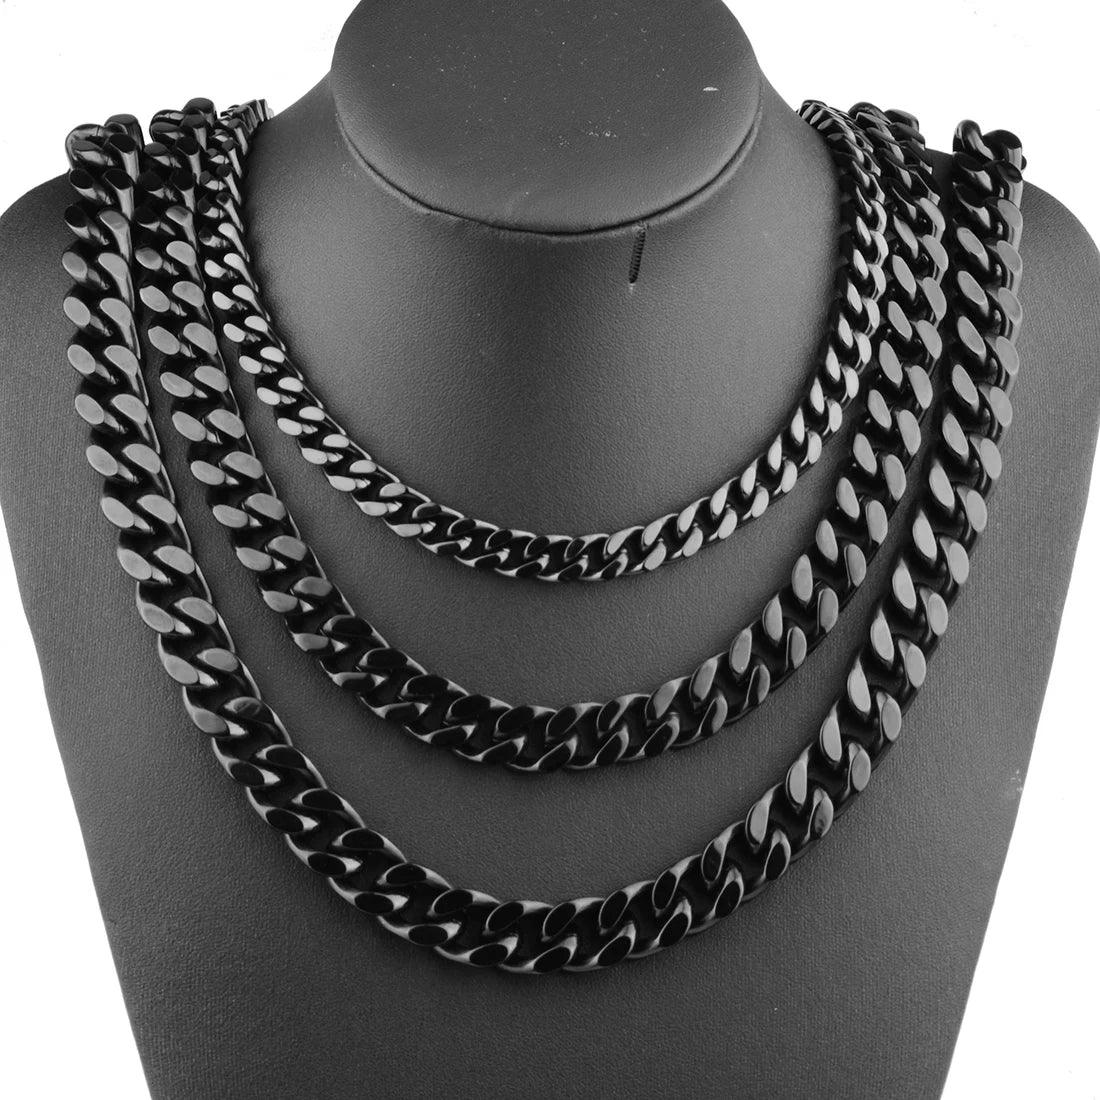 Black Jewelry Stainless Steel Miami Necklaces Lock Clasp Black Punk Jewelry